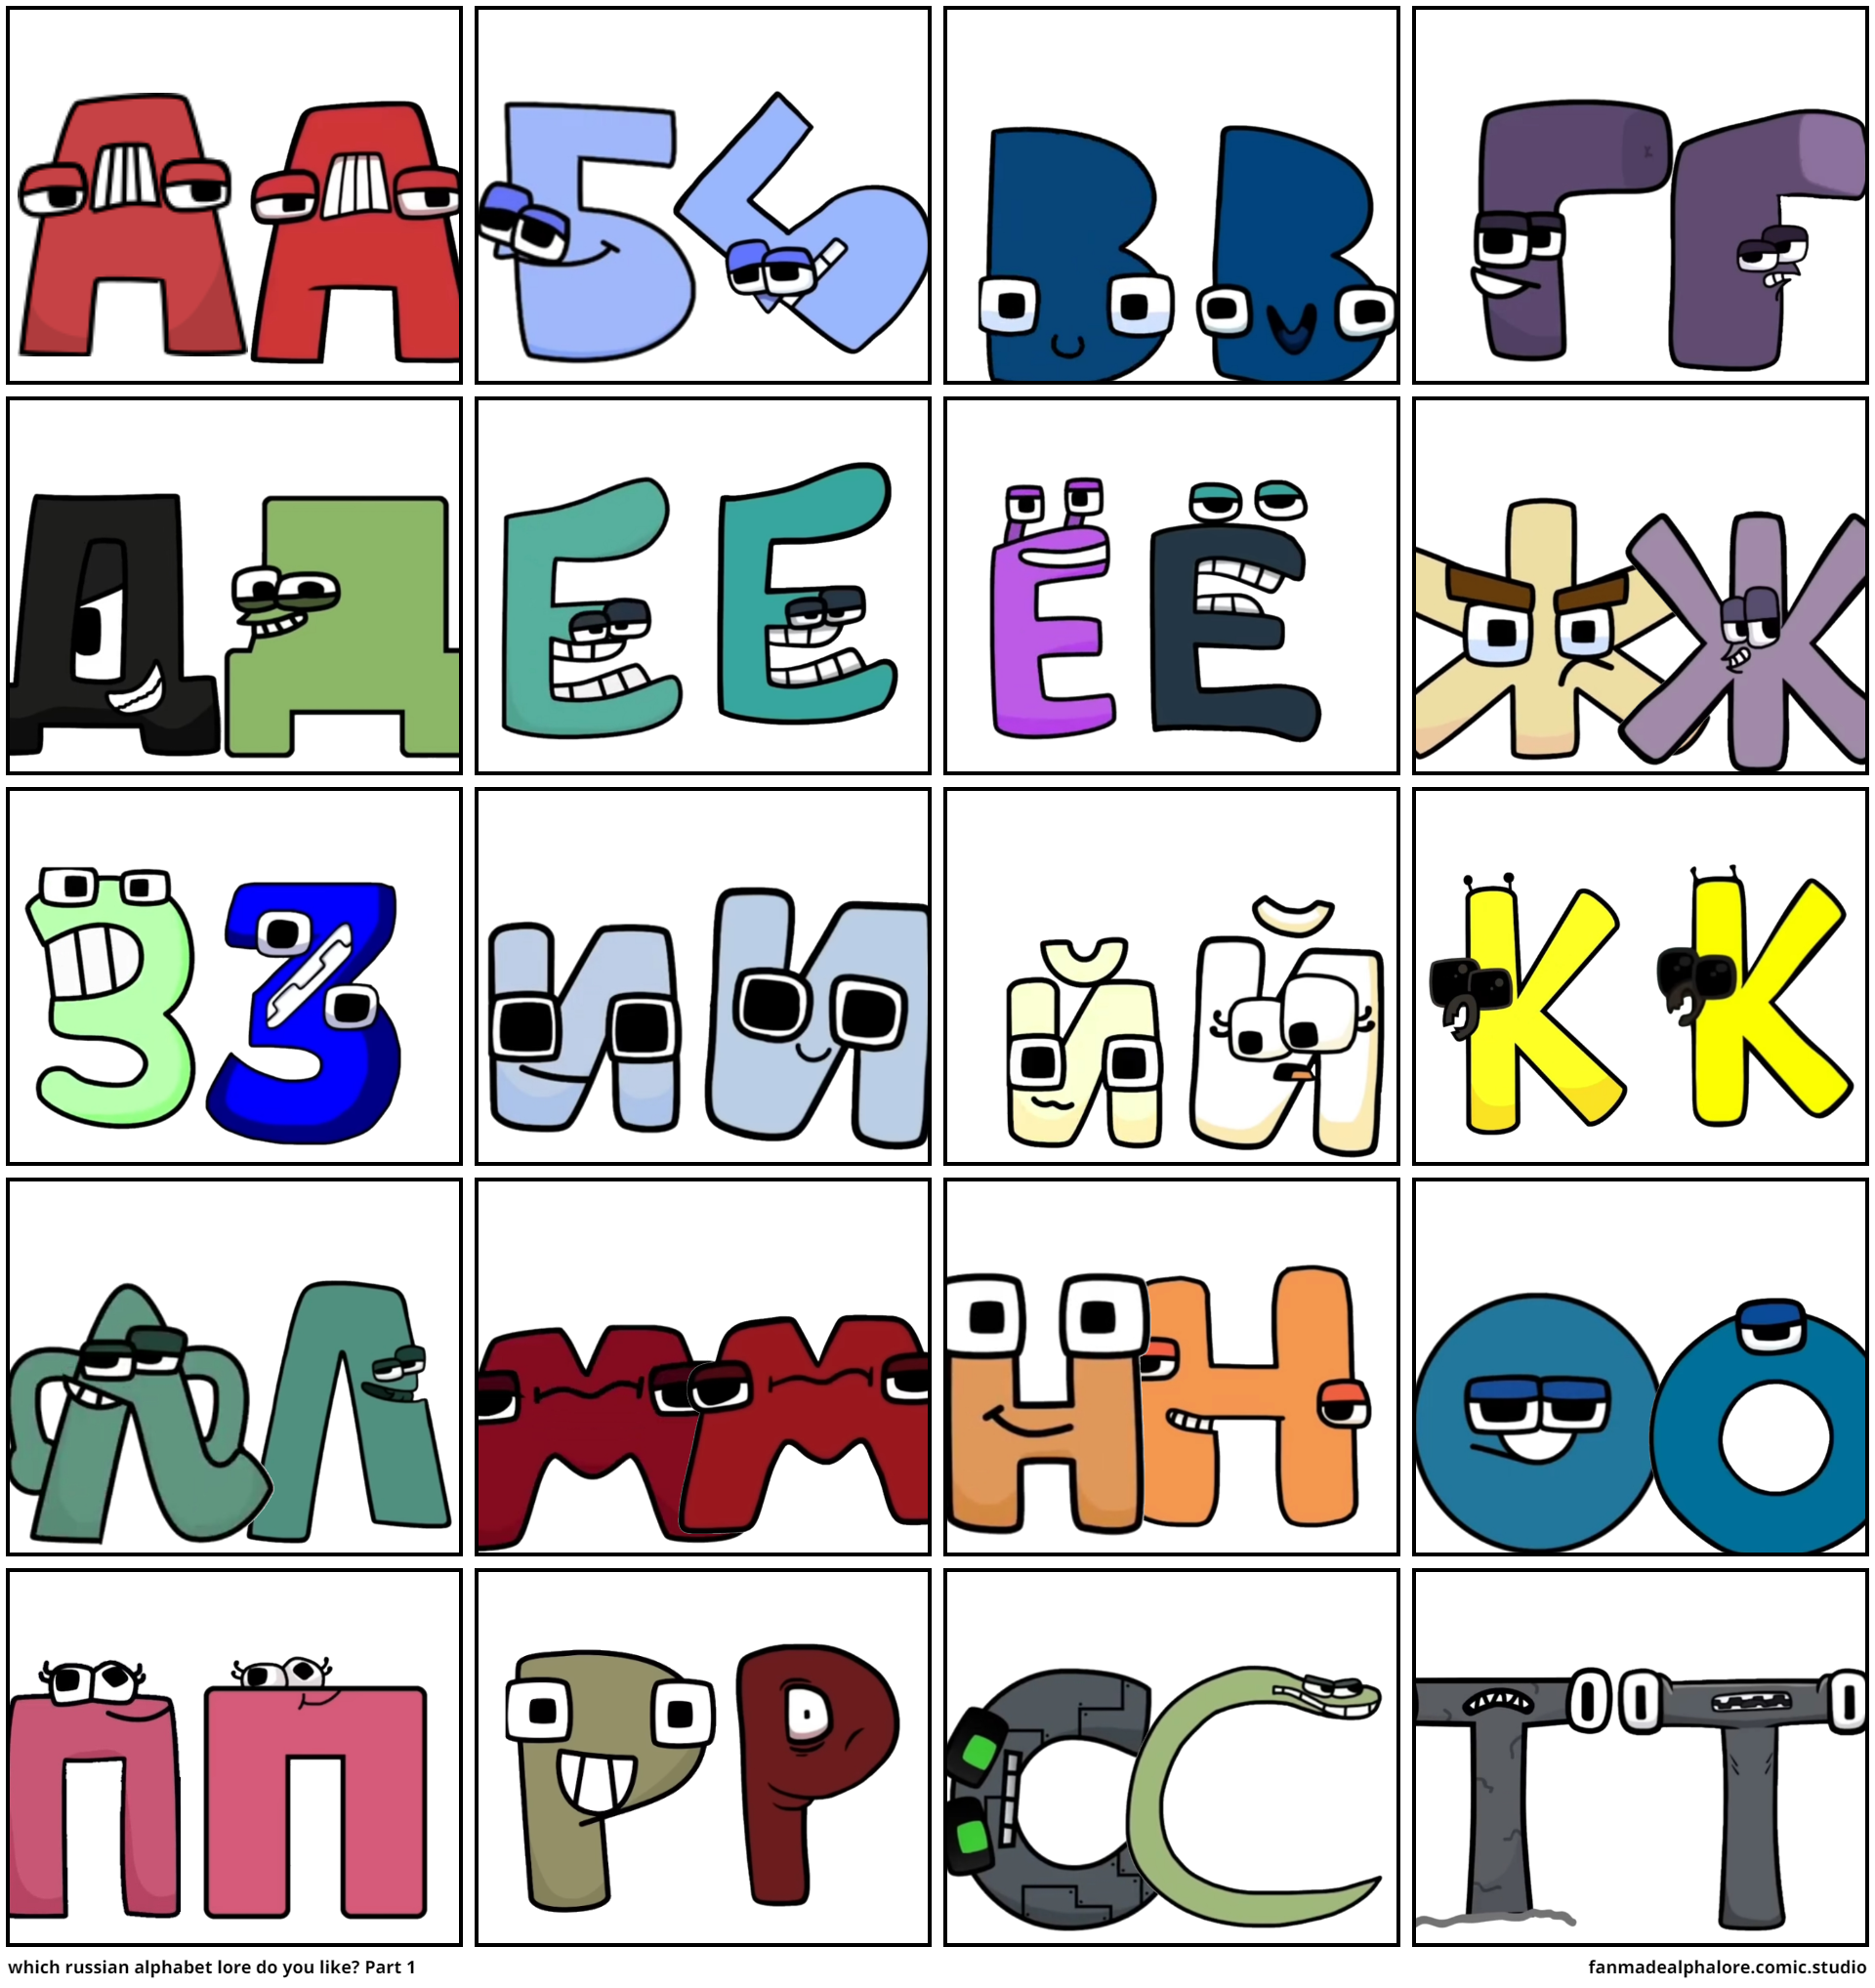 Russian alphabet lore - Comic Studio